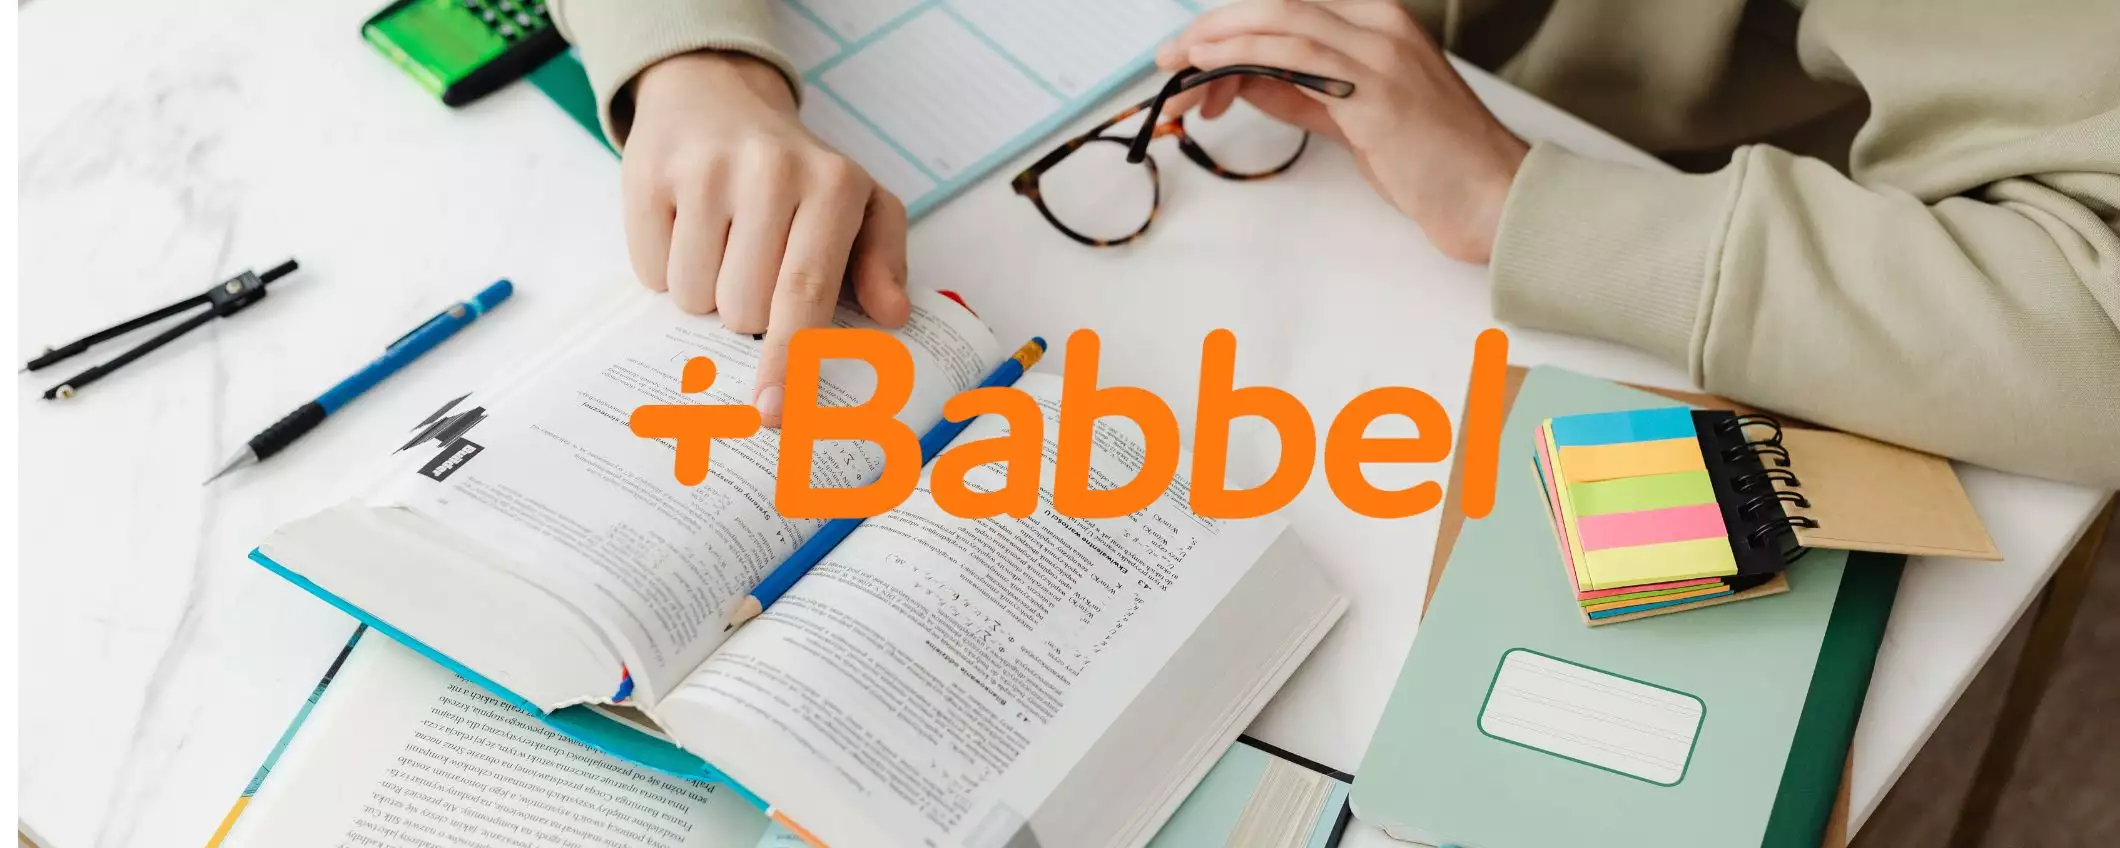 Babbel, impara le lingue con una routine di studio efficace a 5,99€